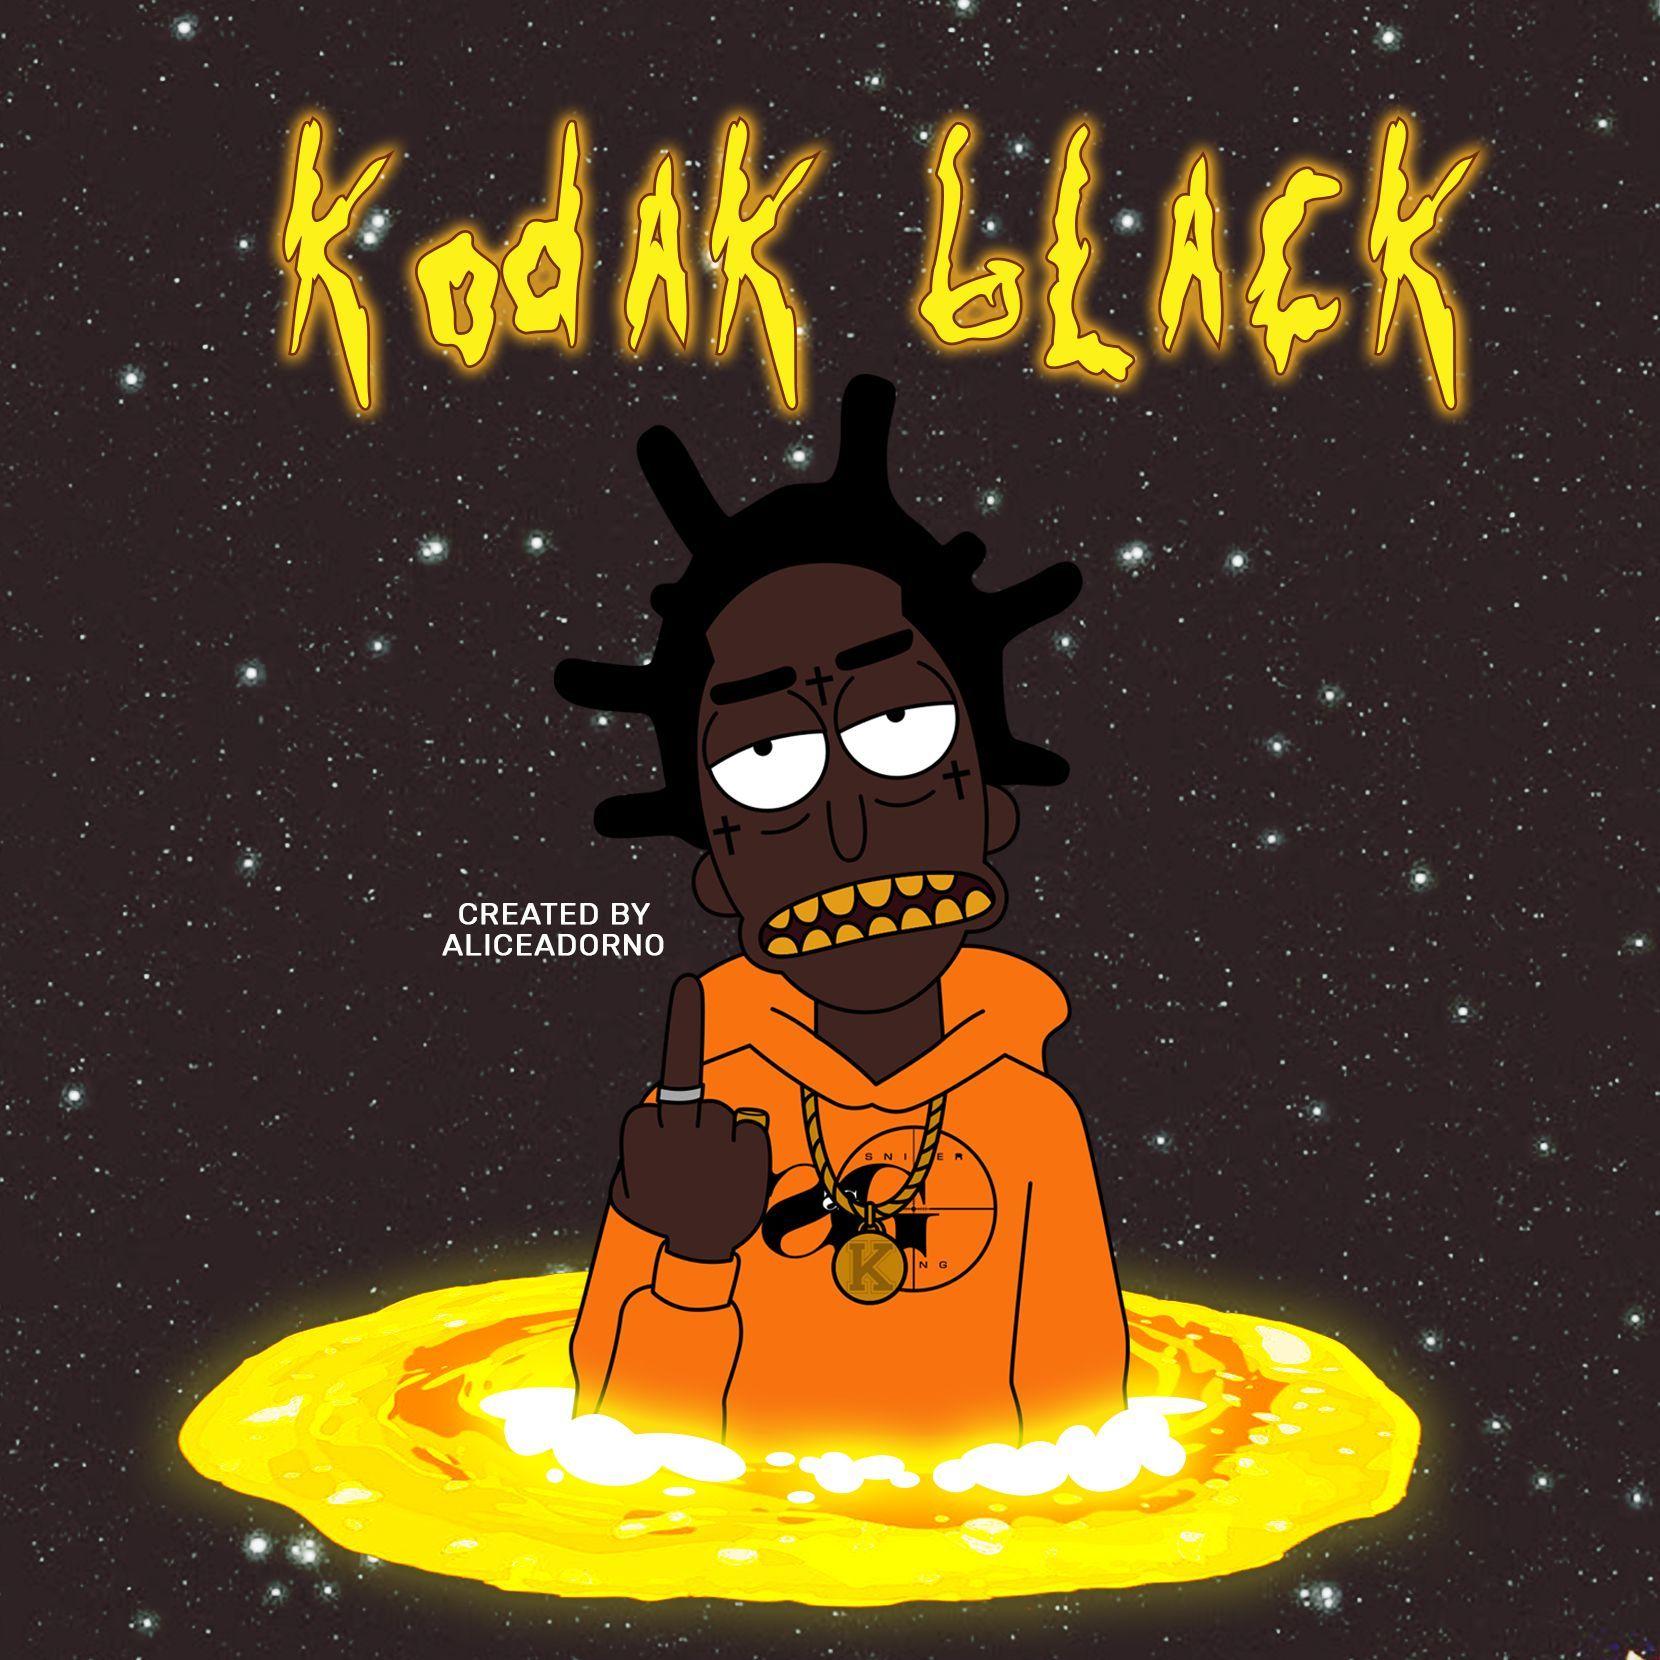 Kodak Black estilo Rick and Morty #rickandmorty